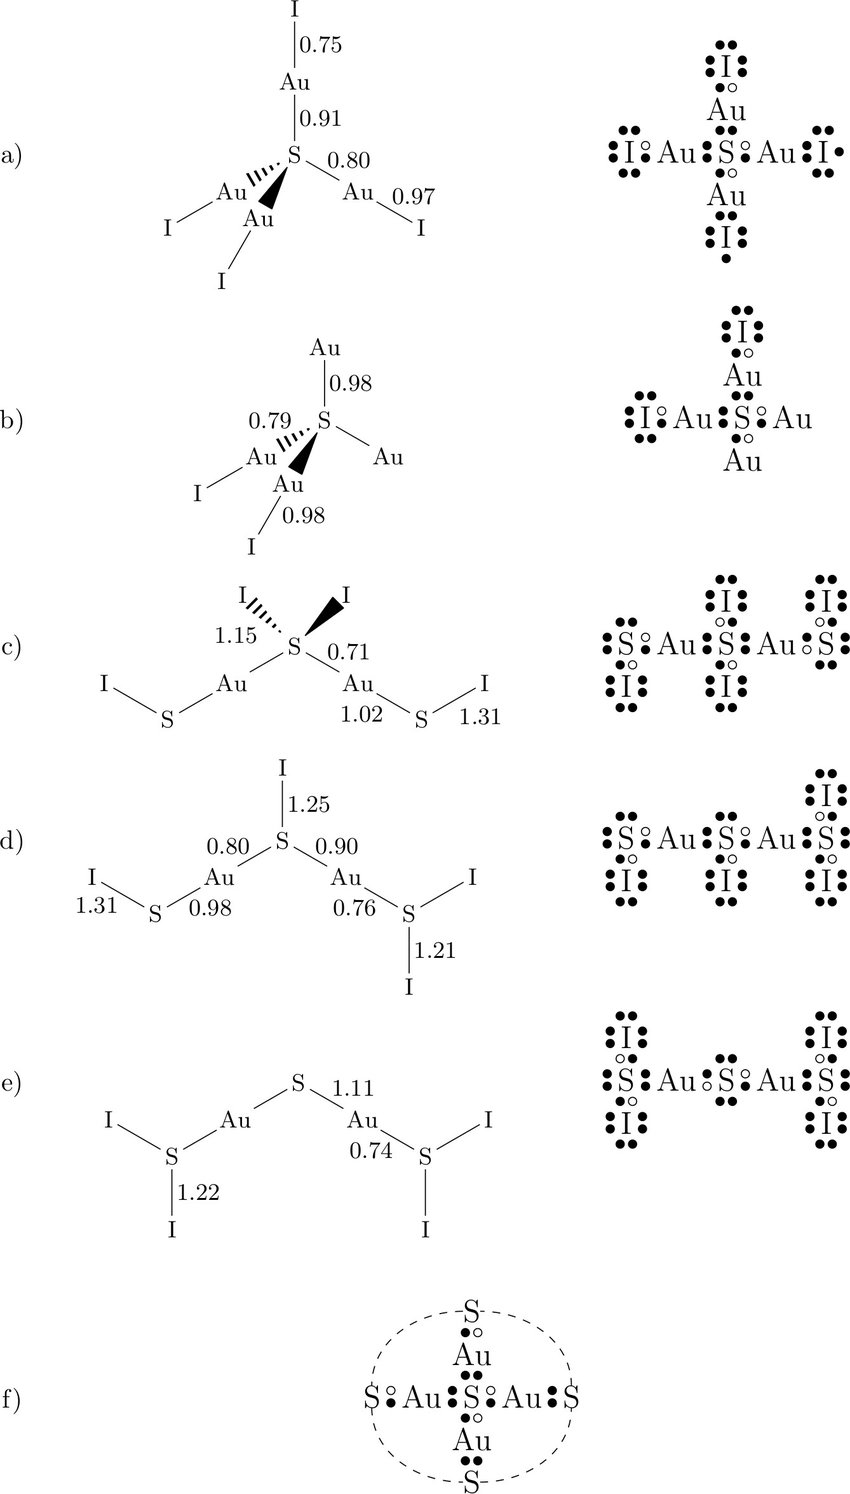 Iodine Dot Diagram Lewis Dot Diagram For Several Molecular Models A E And For Bulk Au